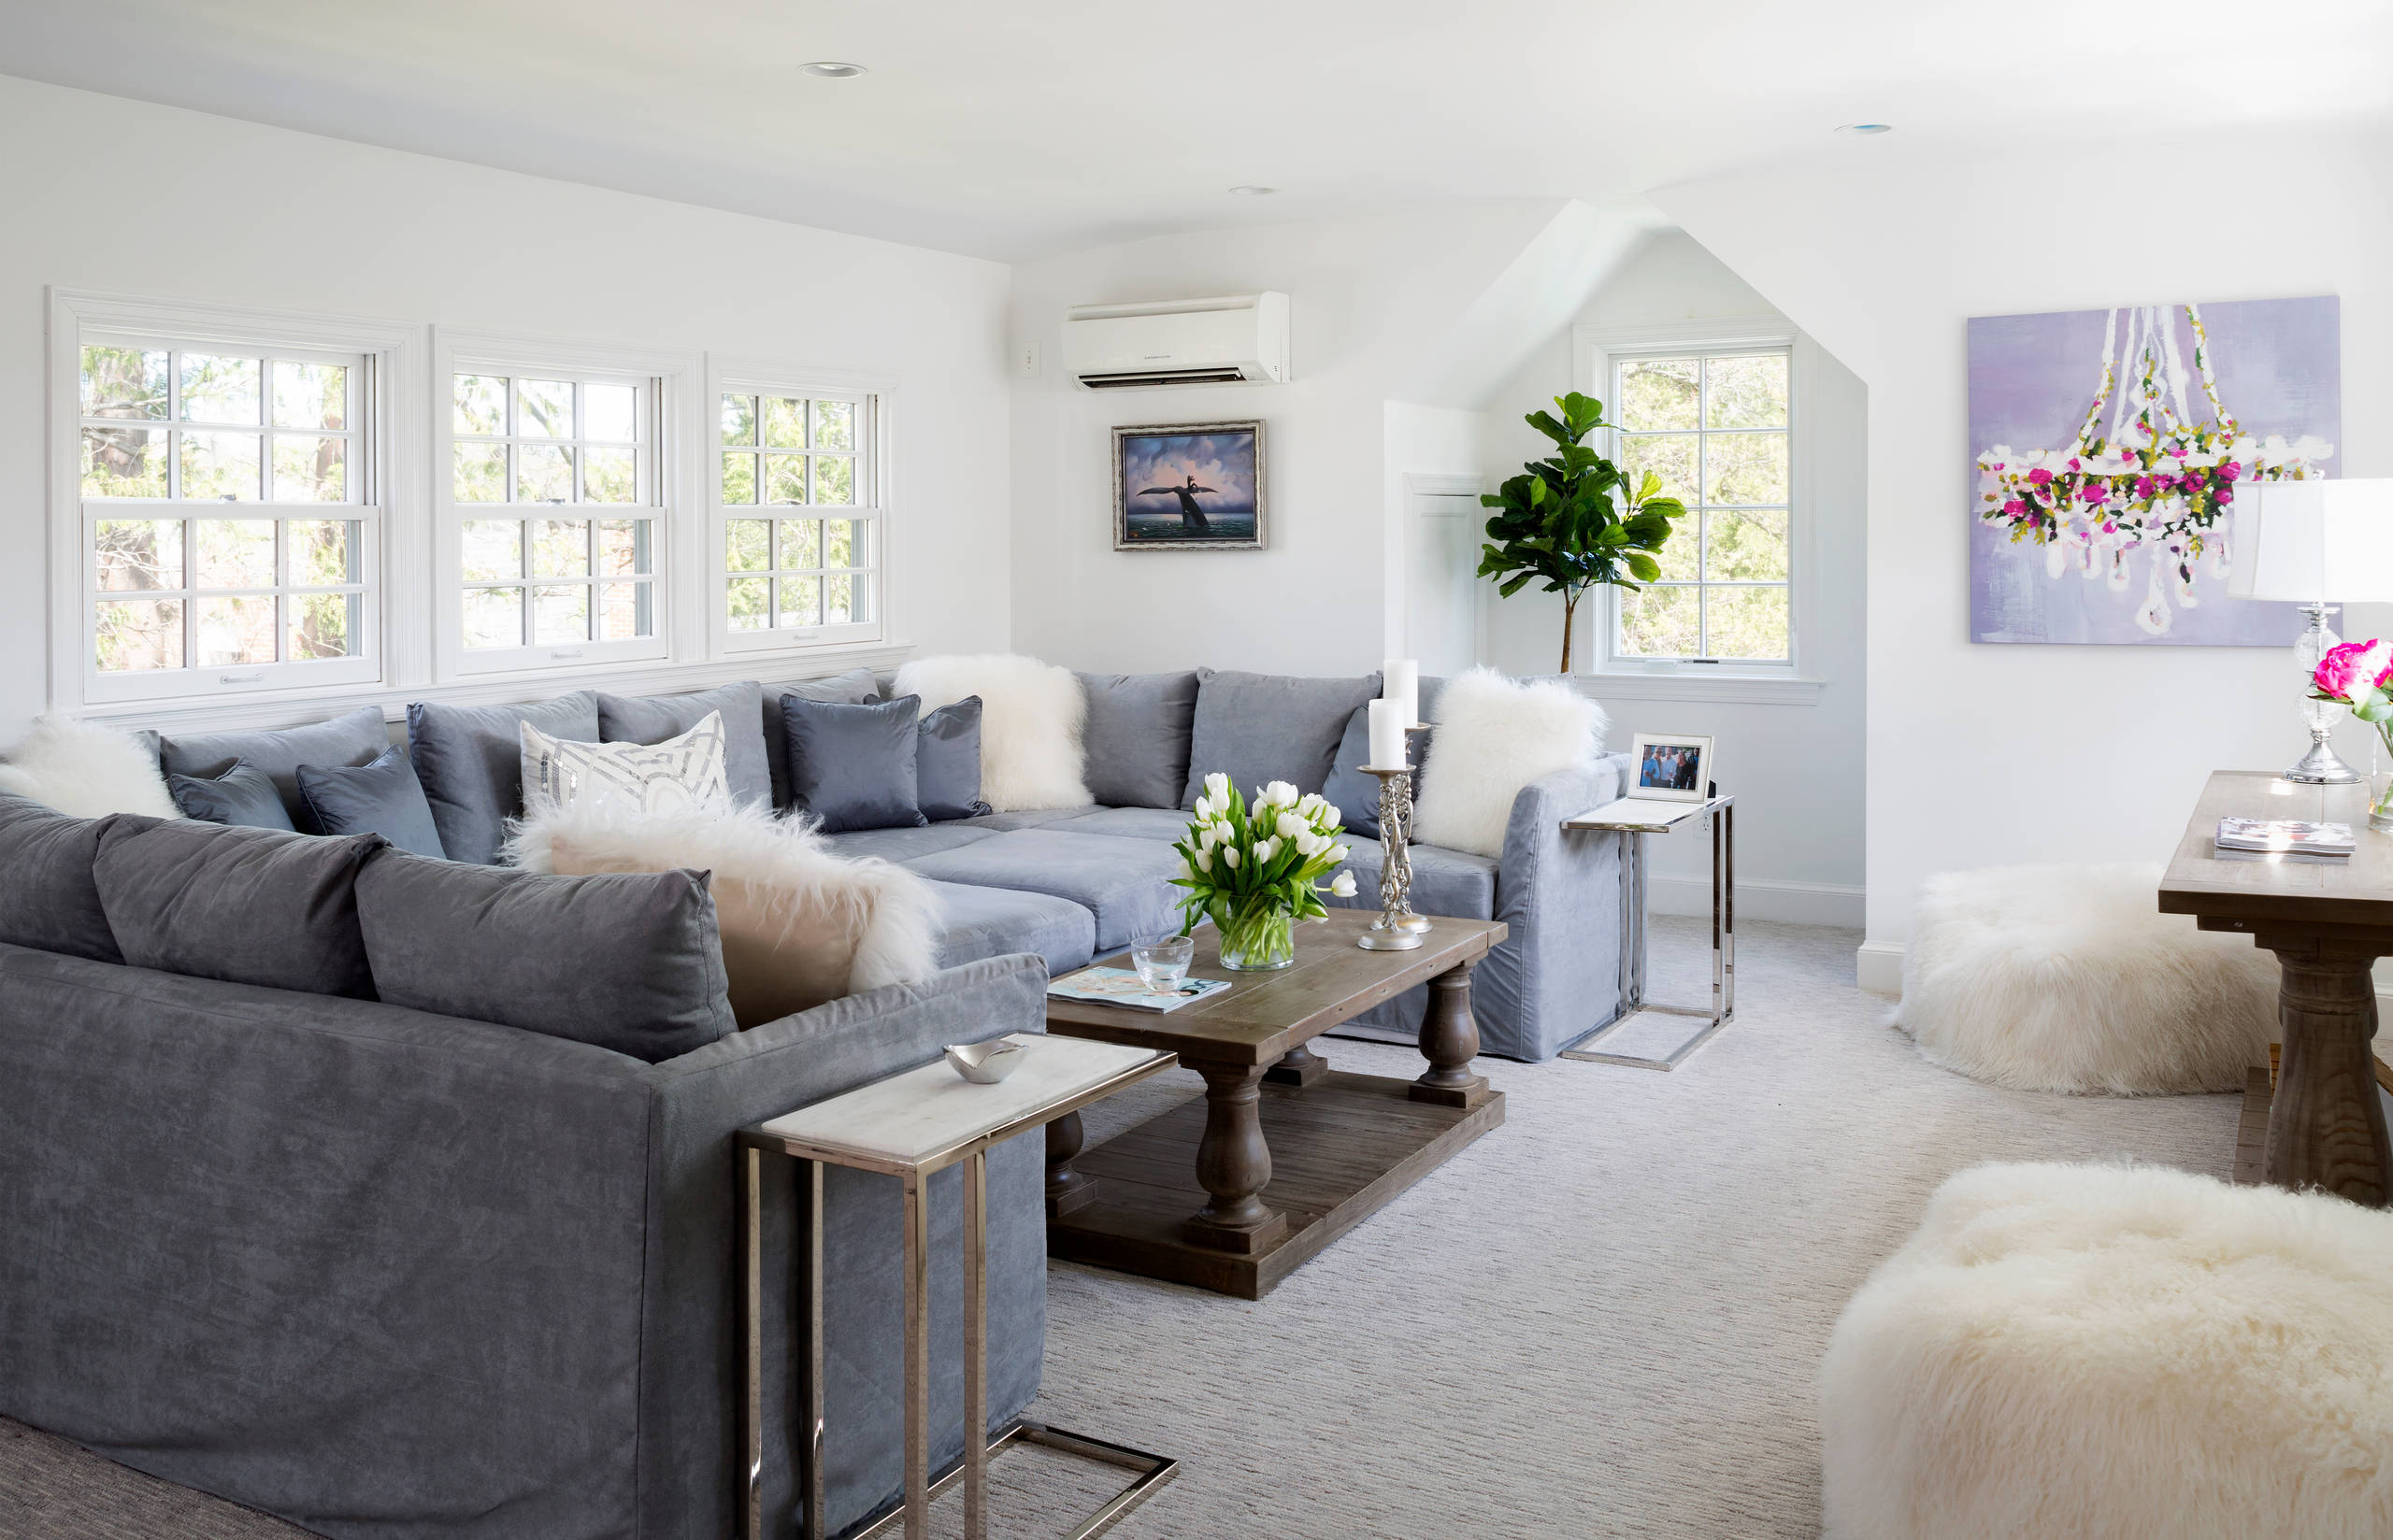 Louis vuitton light grey luxury living room carpet